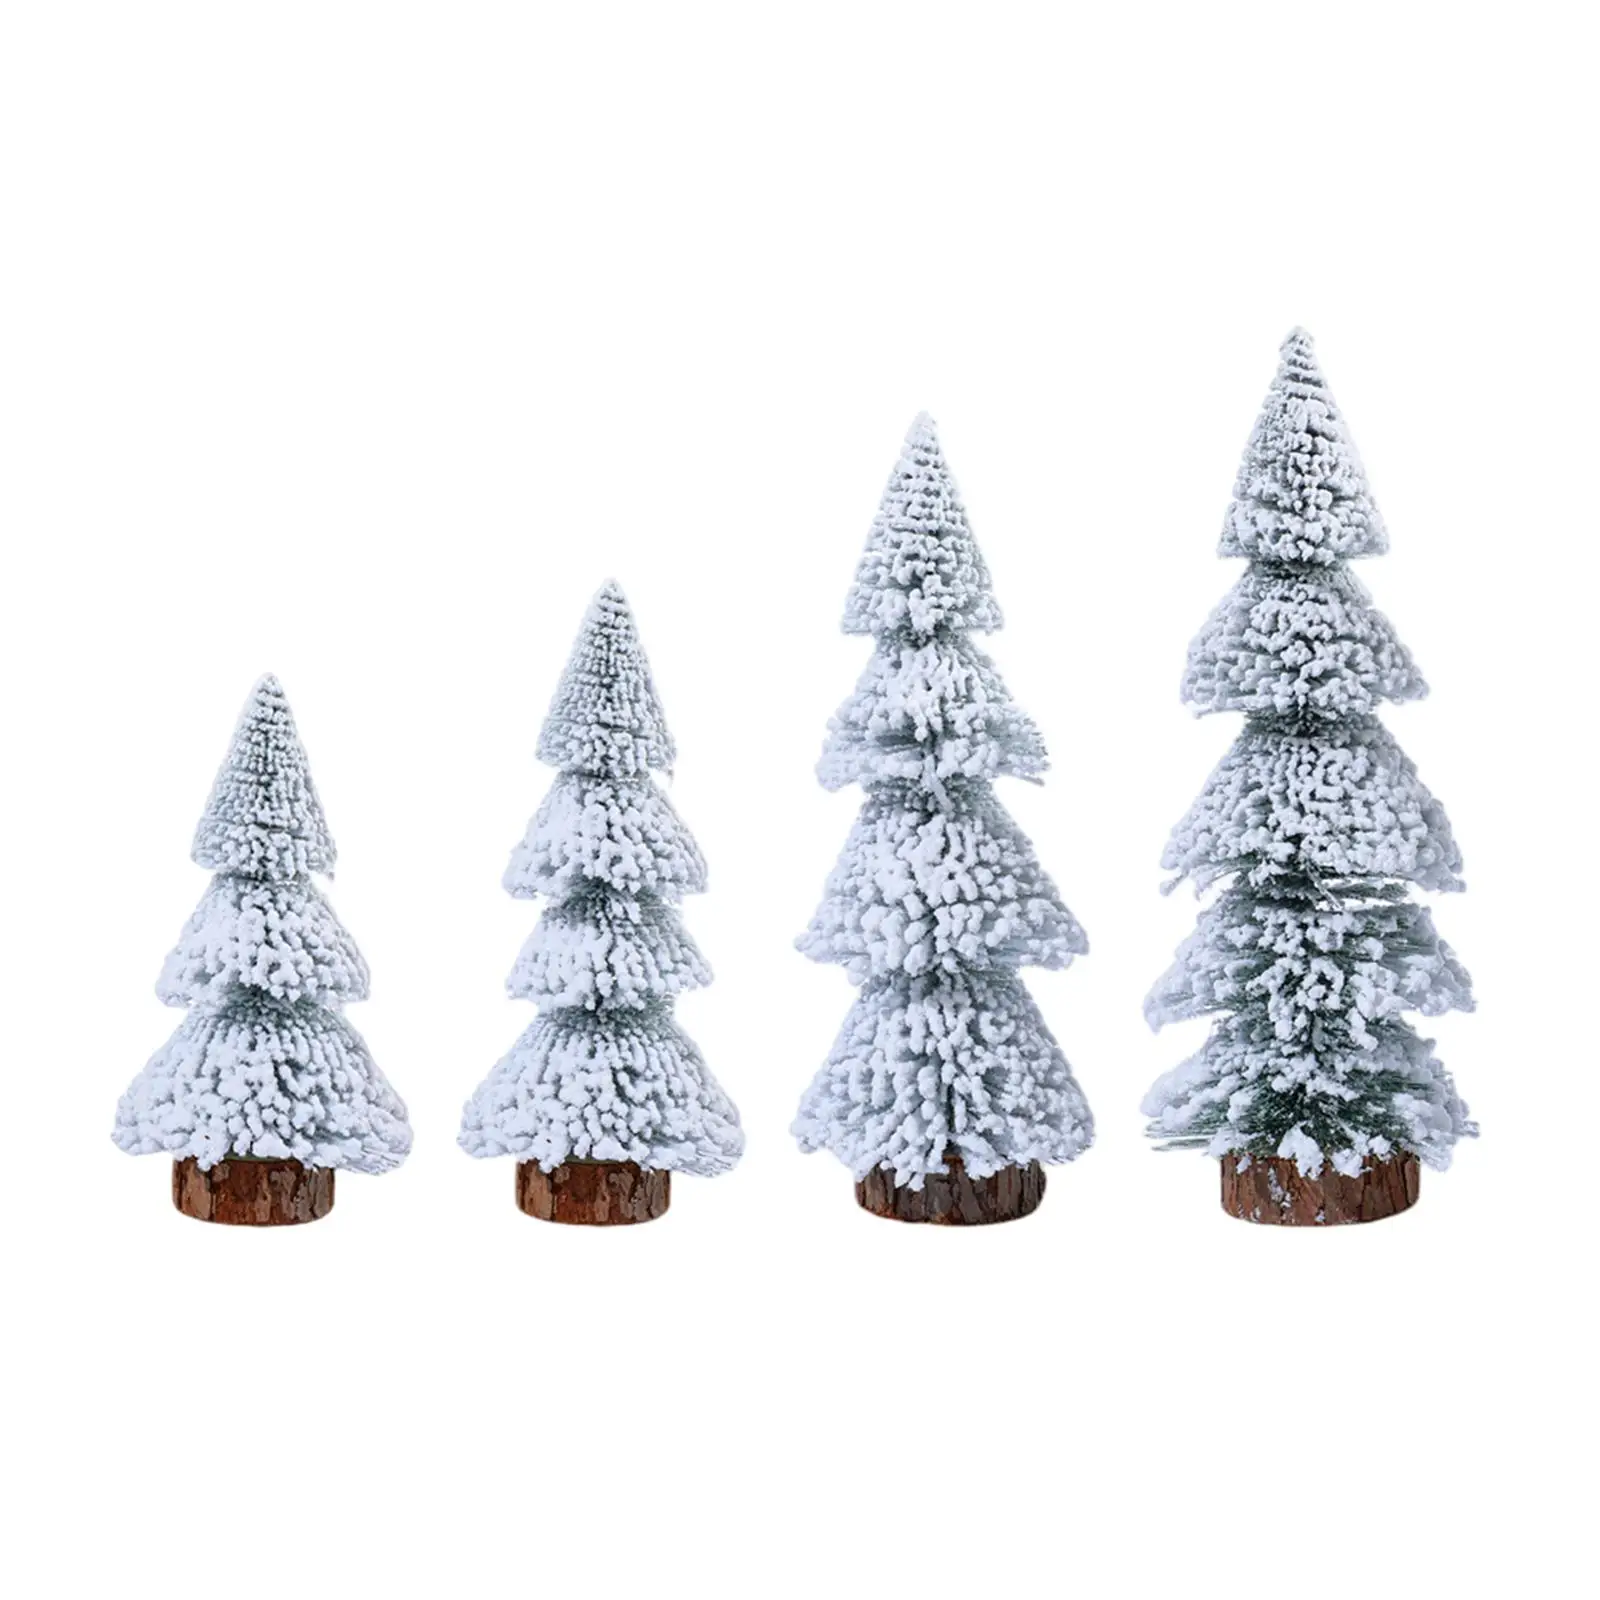 Artificial Mini Snowy Tree Party Supplies Decorative Rustic Small Ornament Mini Xmas Tree for Shelf Desk Christmas Holiday Decor